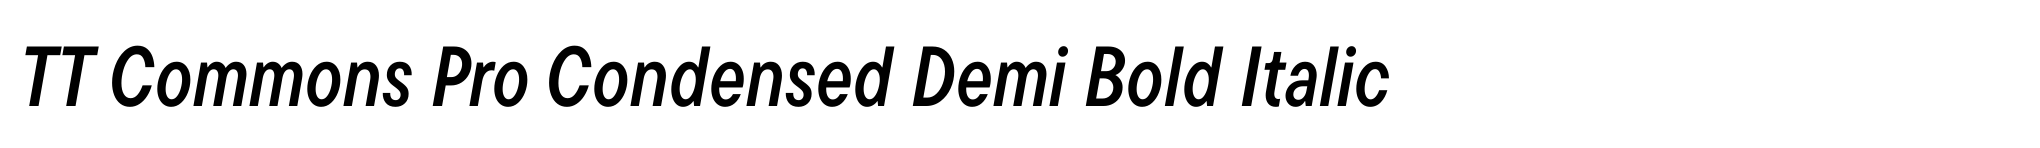 TT Commons Pro Condensed Demi Bold Italic image